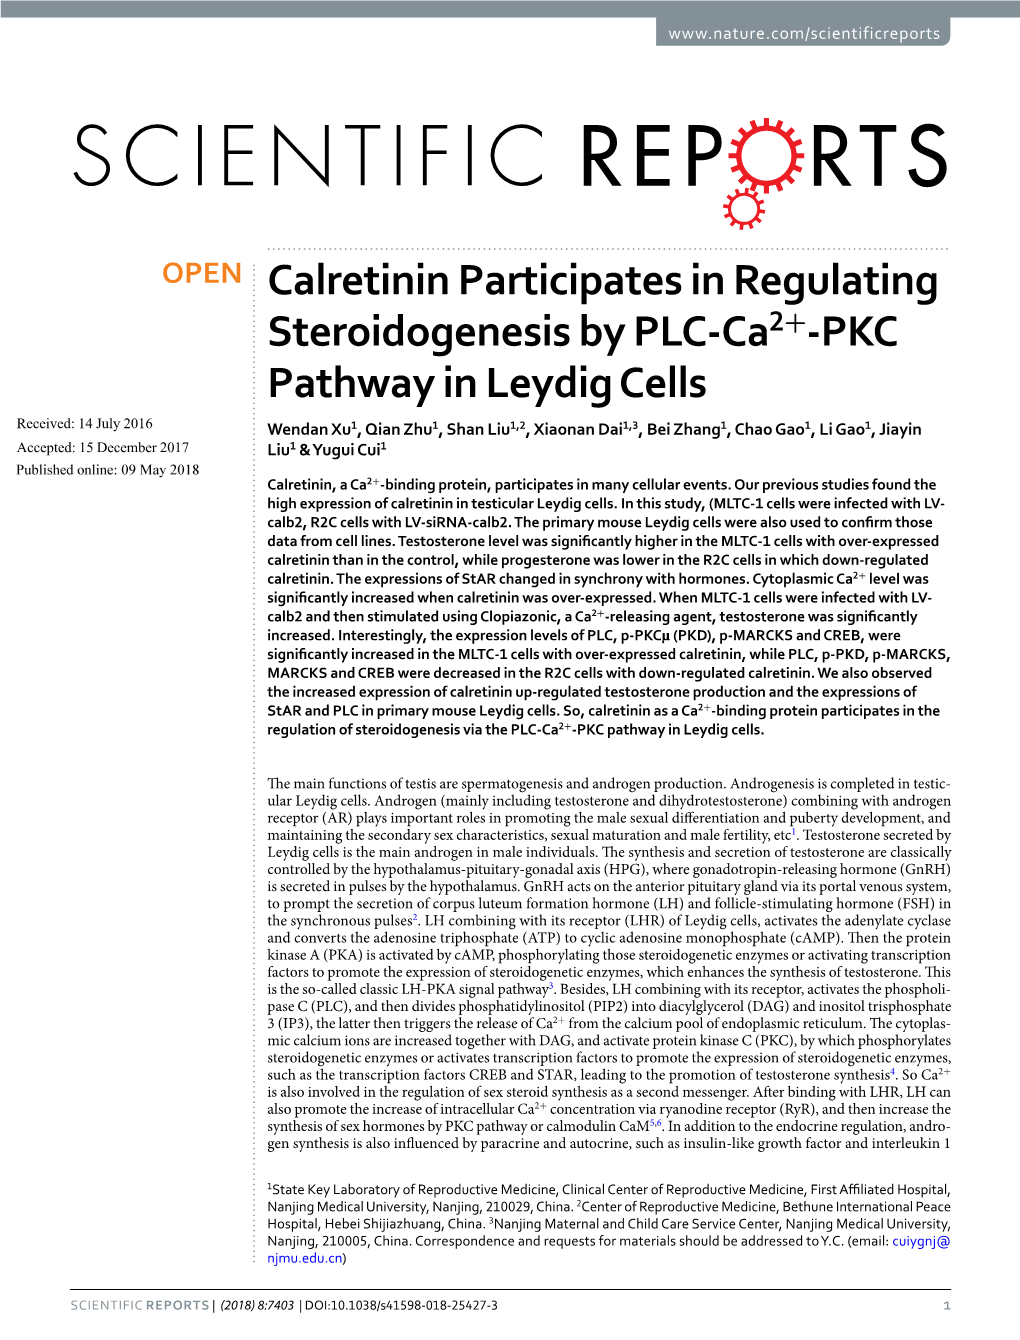 Calretinin Participates in Regulating Steroidogenesis by PLC-Ca2+-PKC